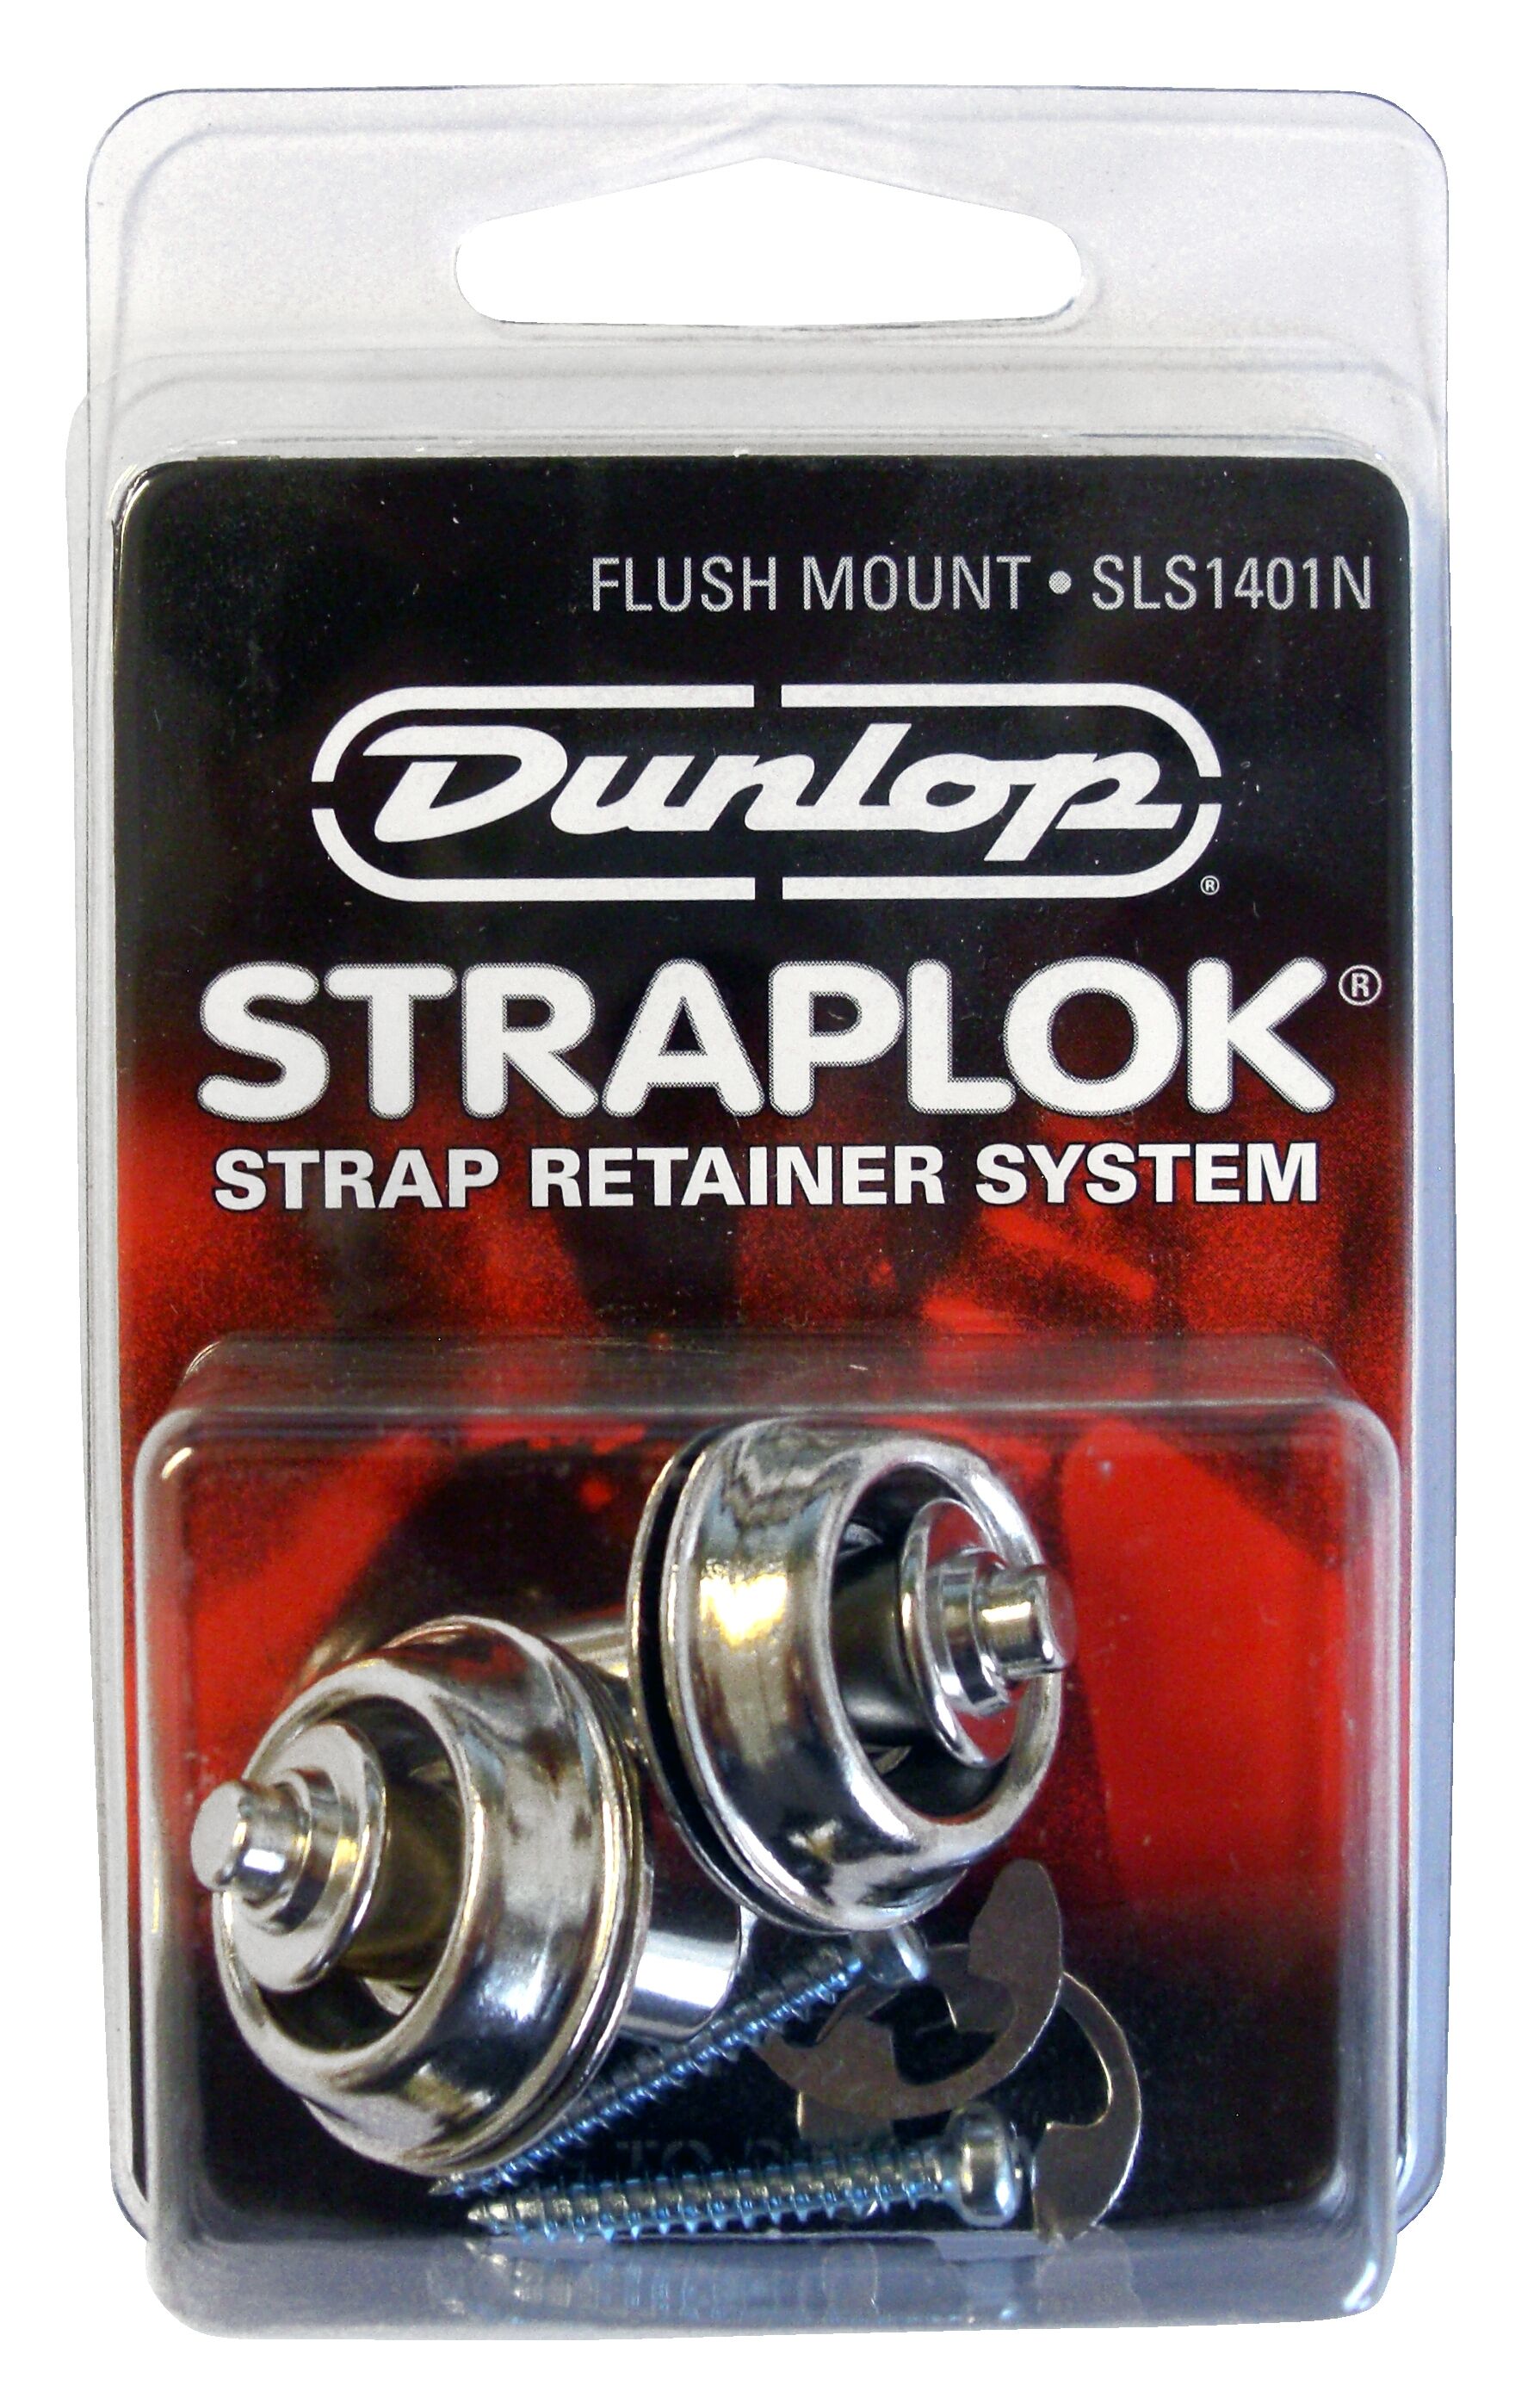 Dunlop Straplok SLS 1401N Nickel Flush Mount